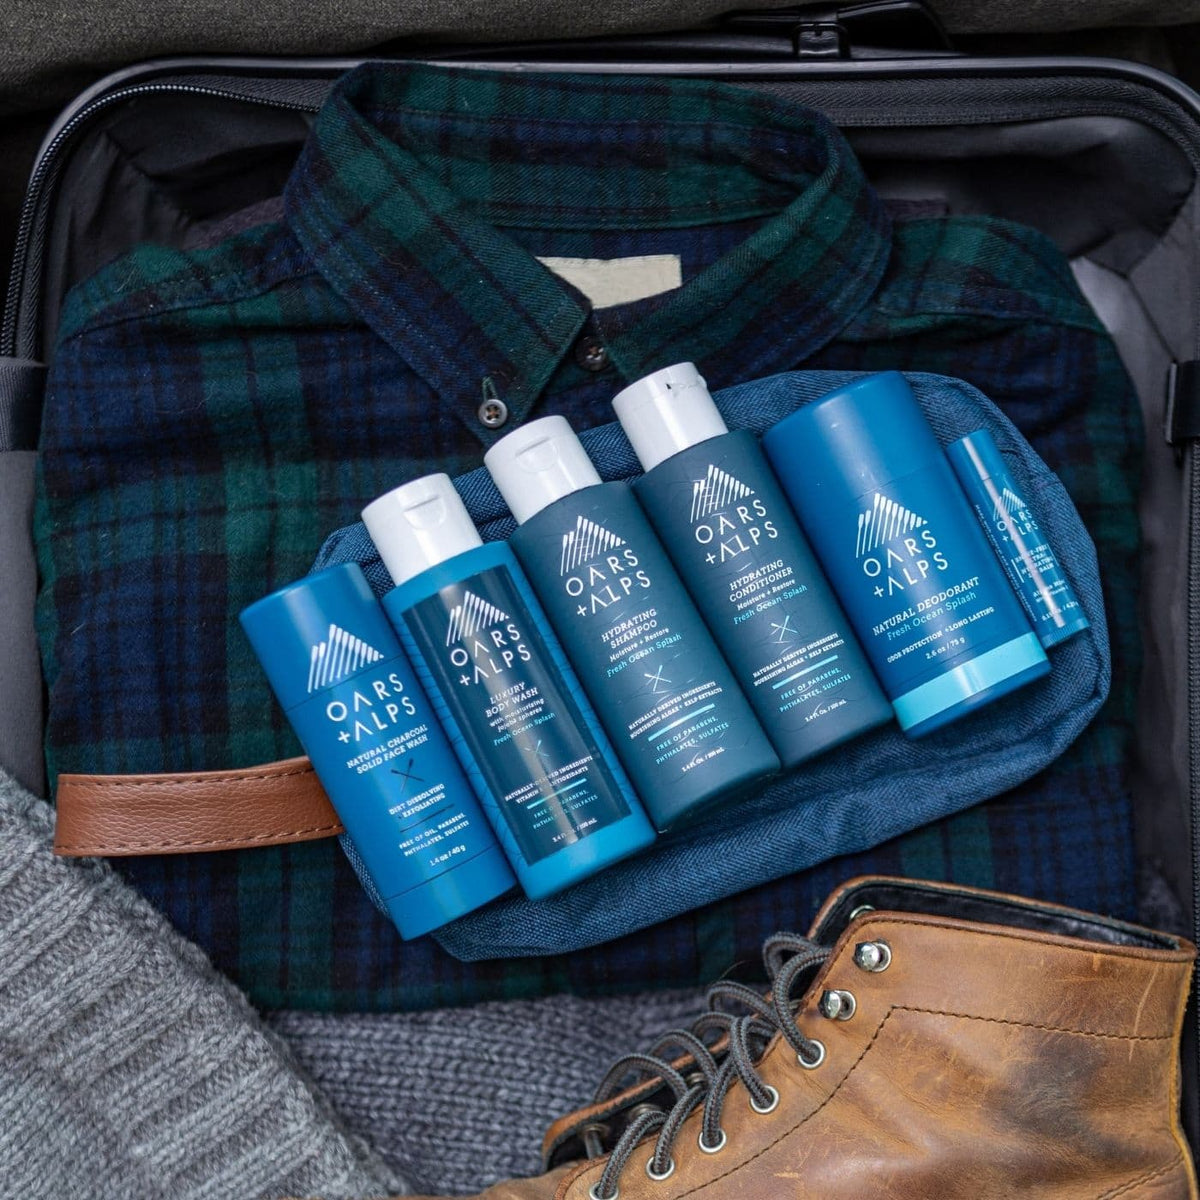 Travel Kit: Travel Shampoo, Conditioner, Body Wash + Deodorant – Oars + Alps